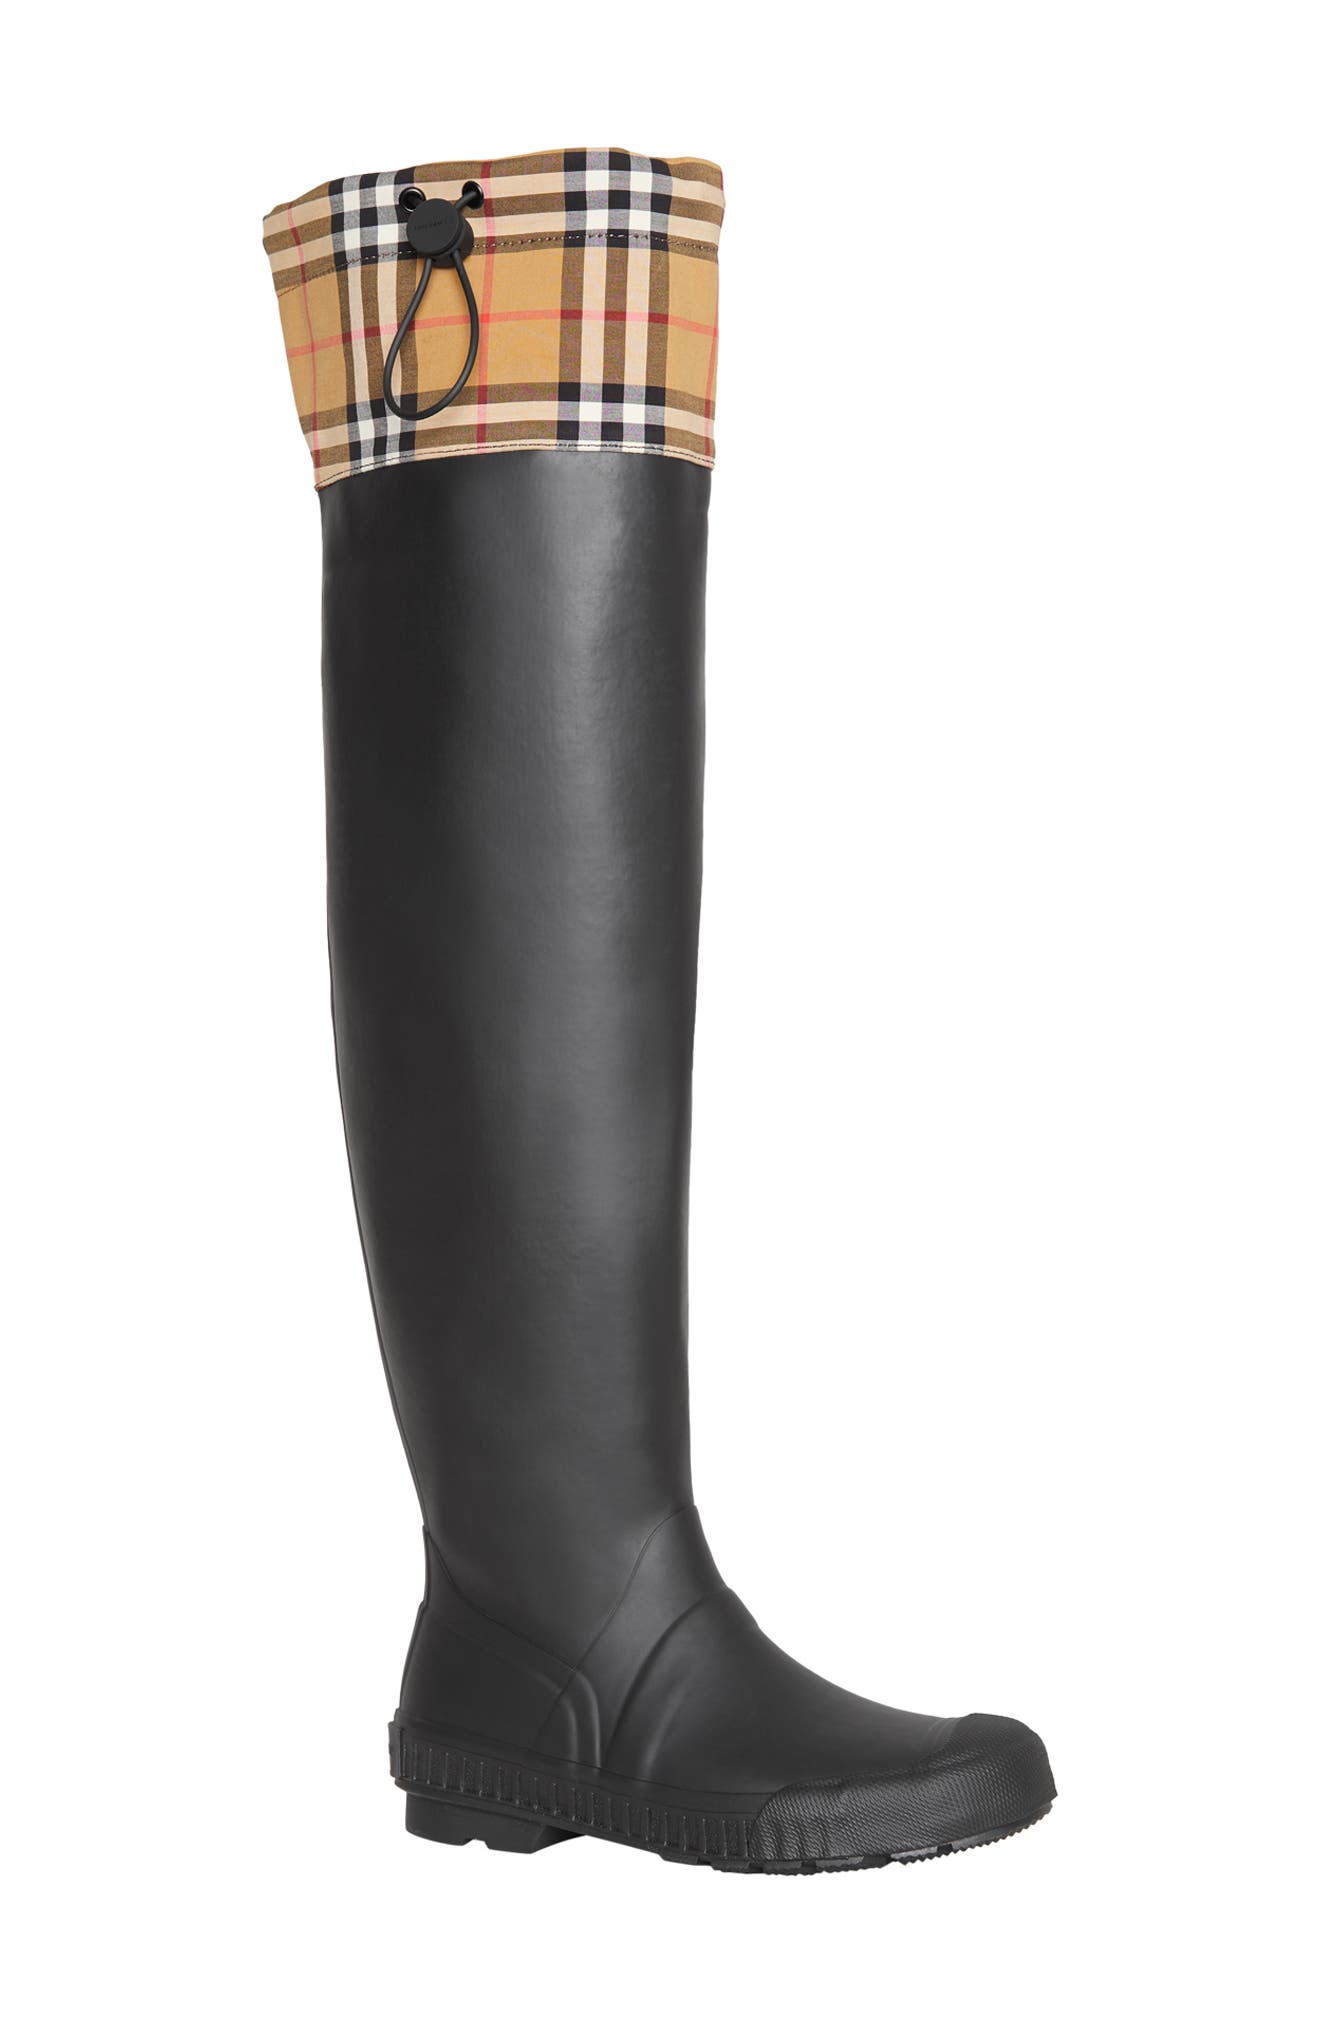 burberry rain boots size 12